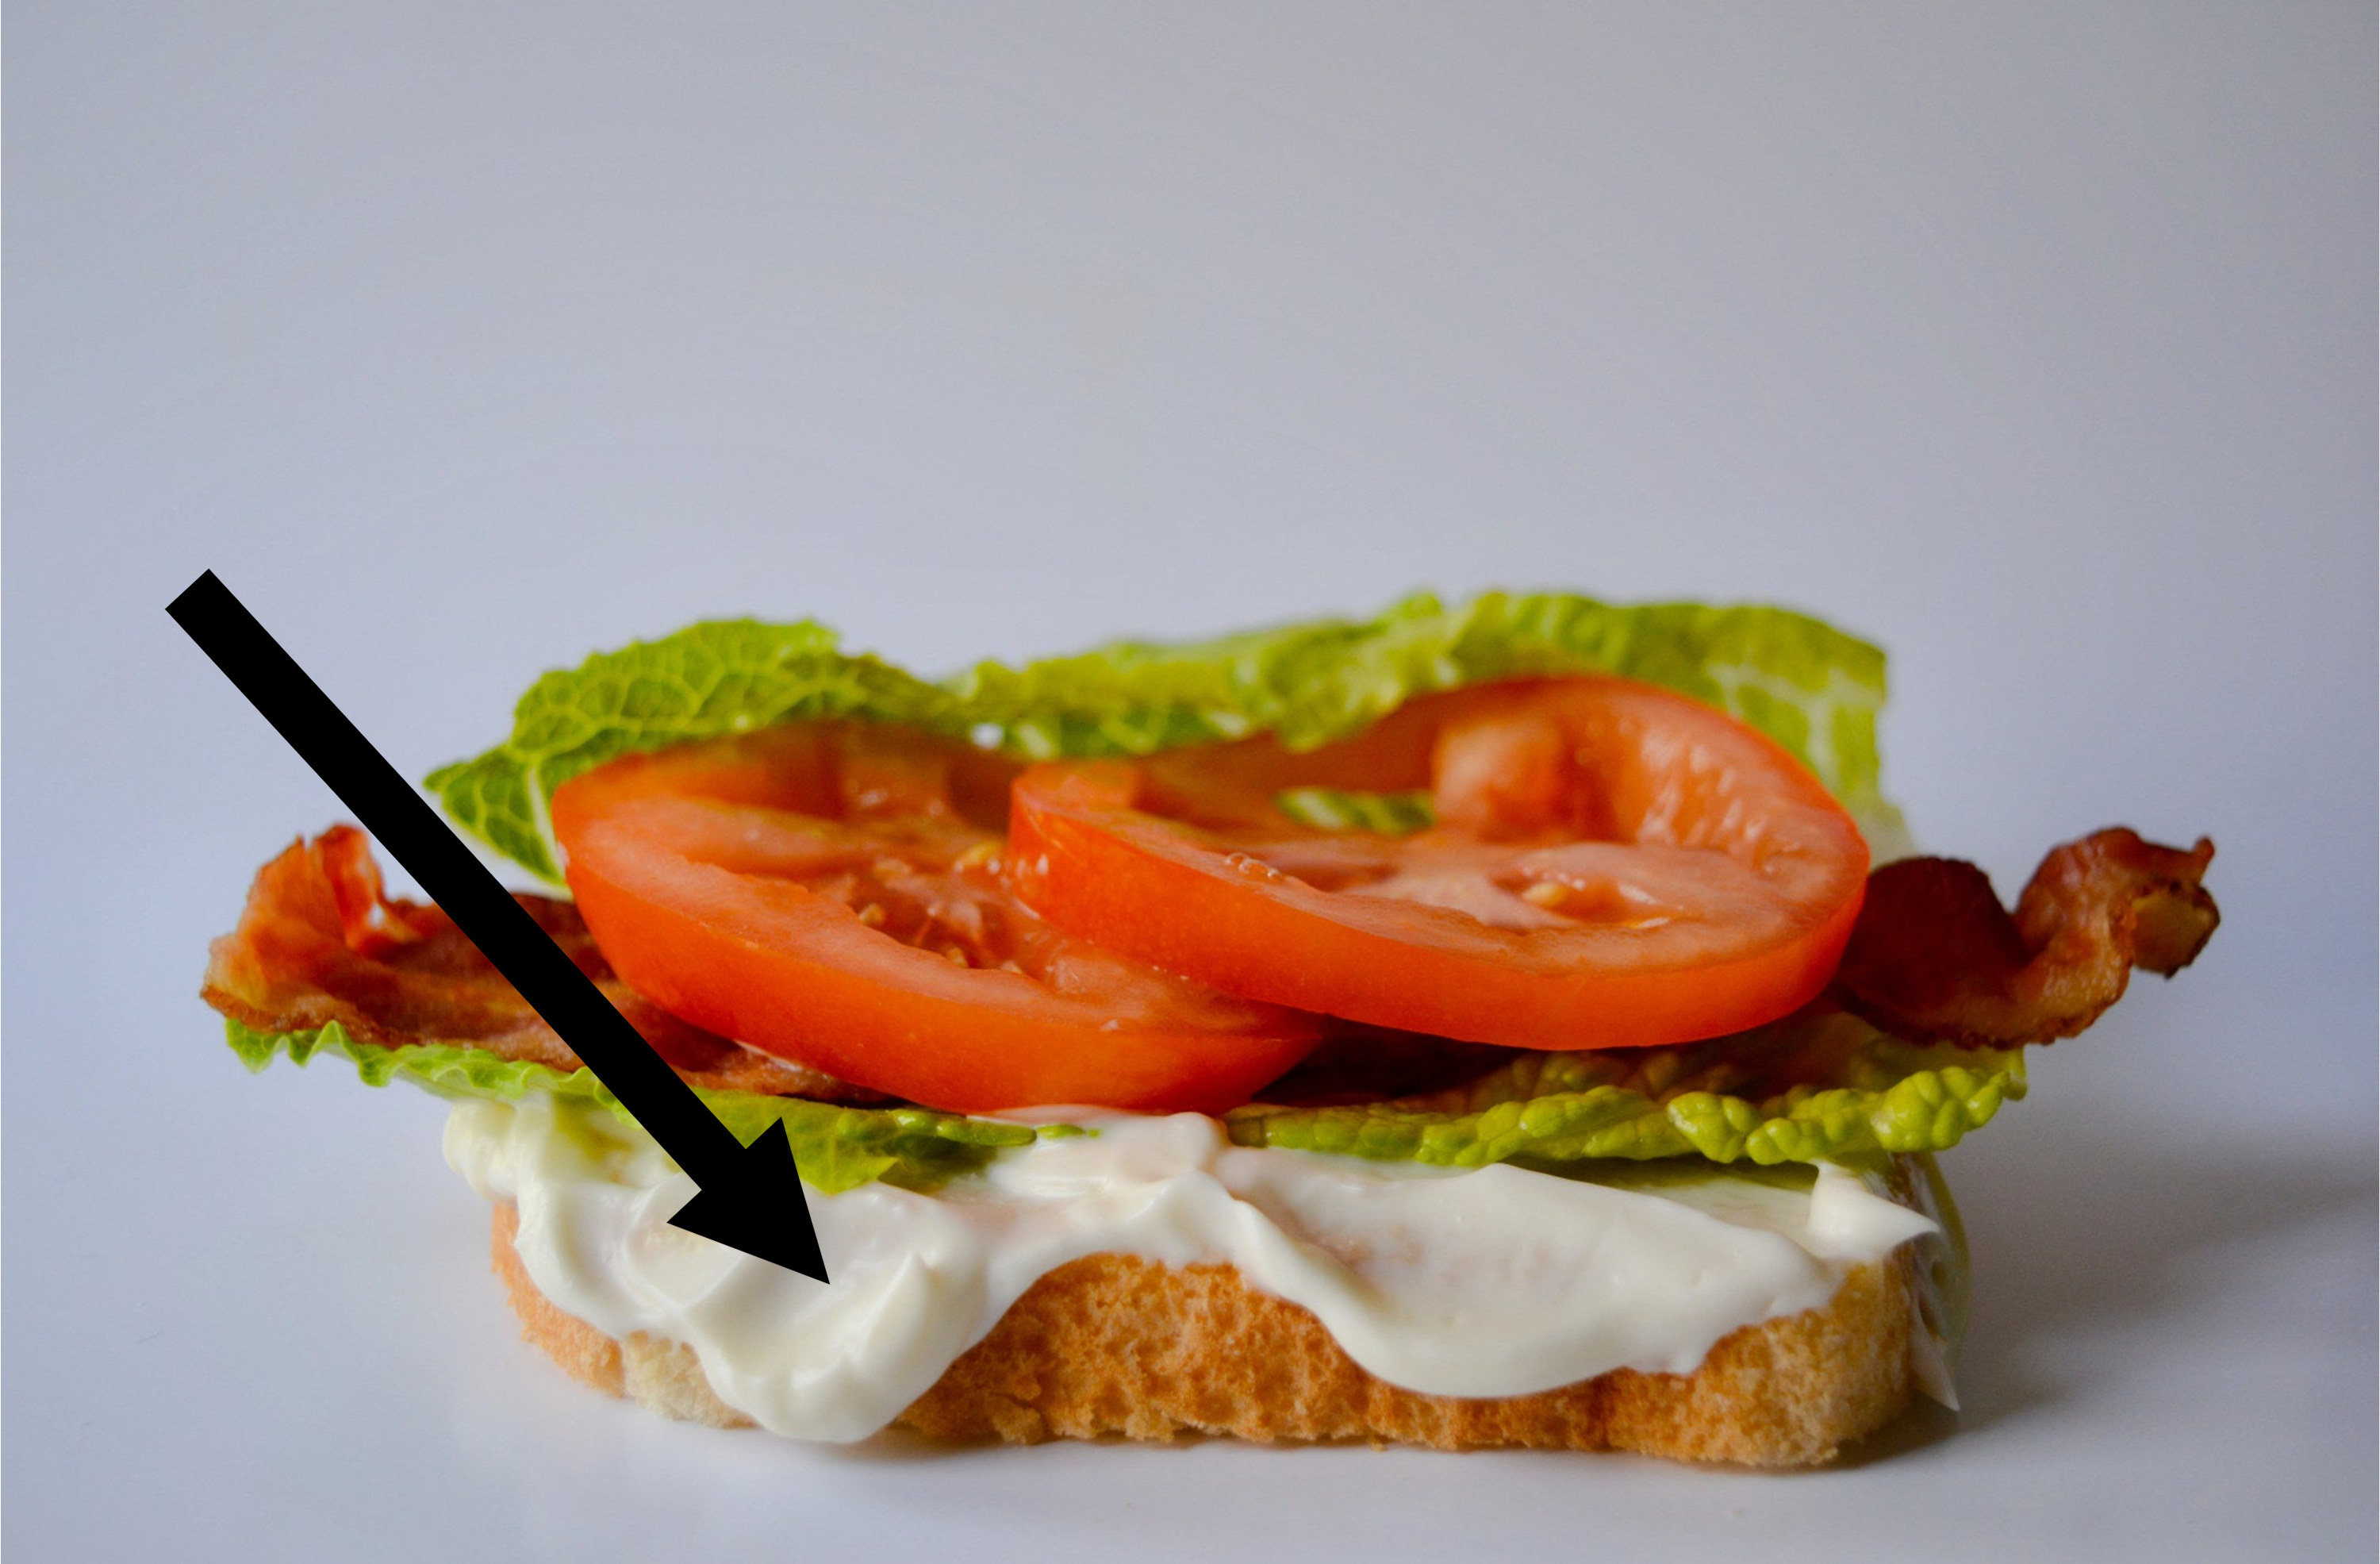 A BLT on bread with mayonnaise.